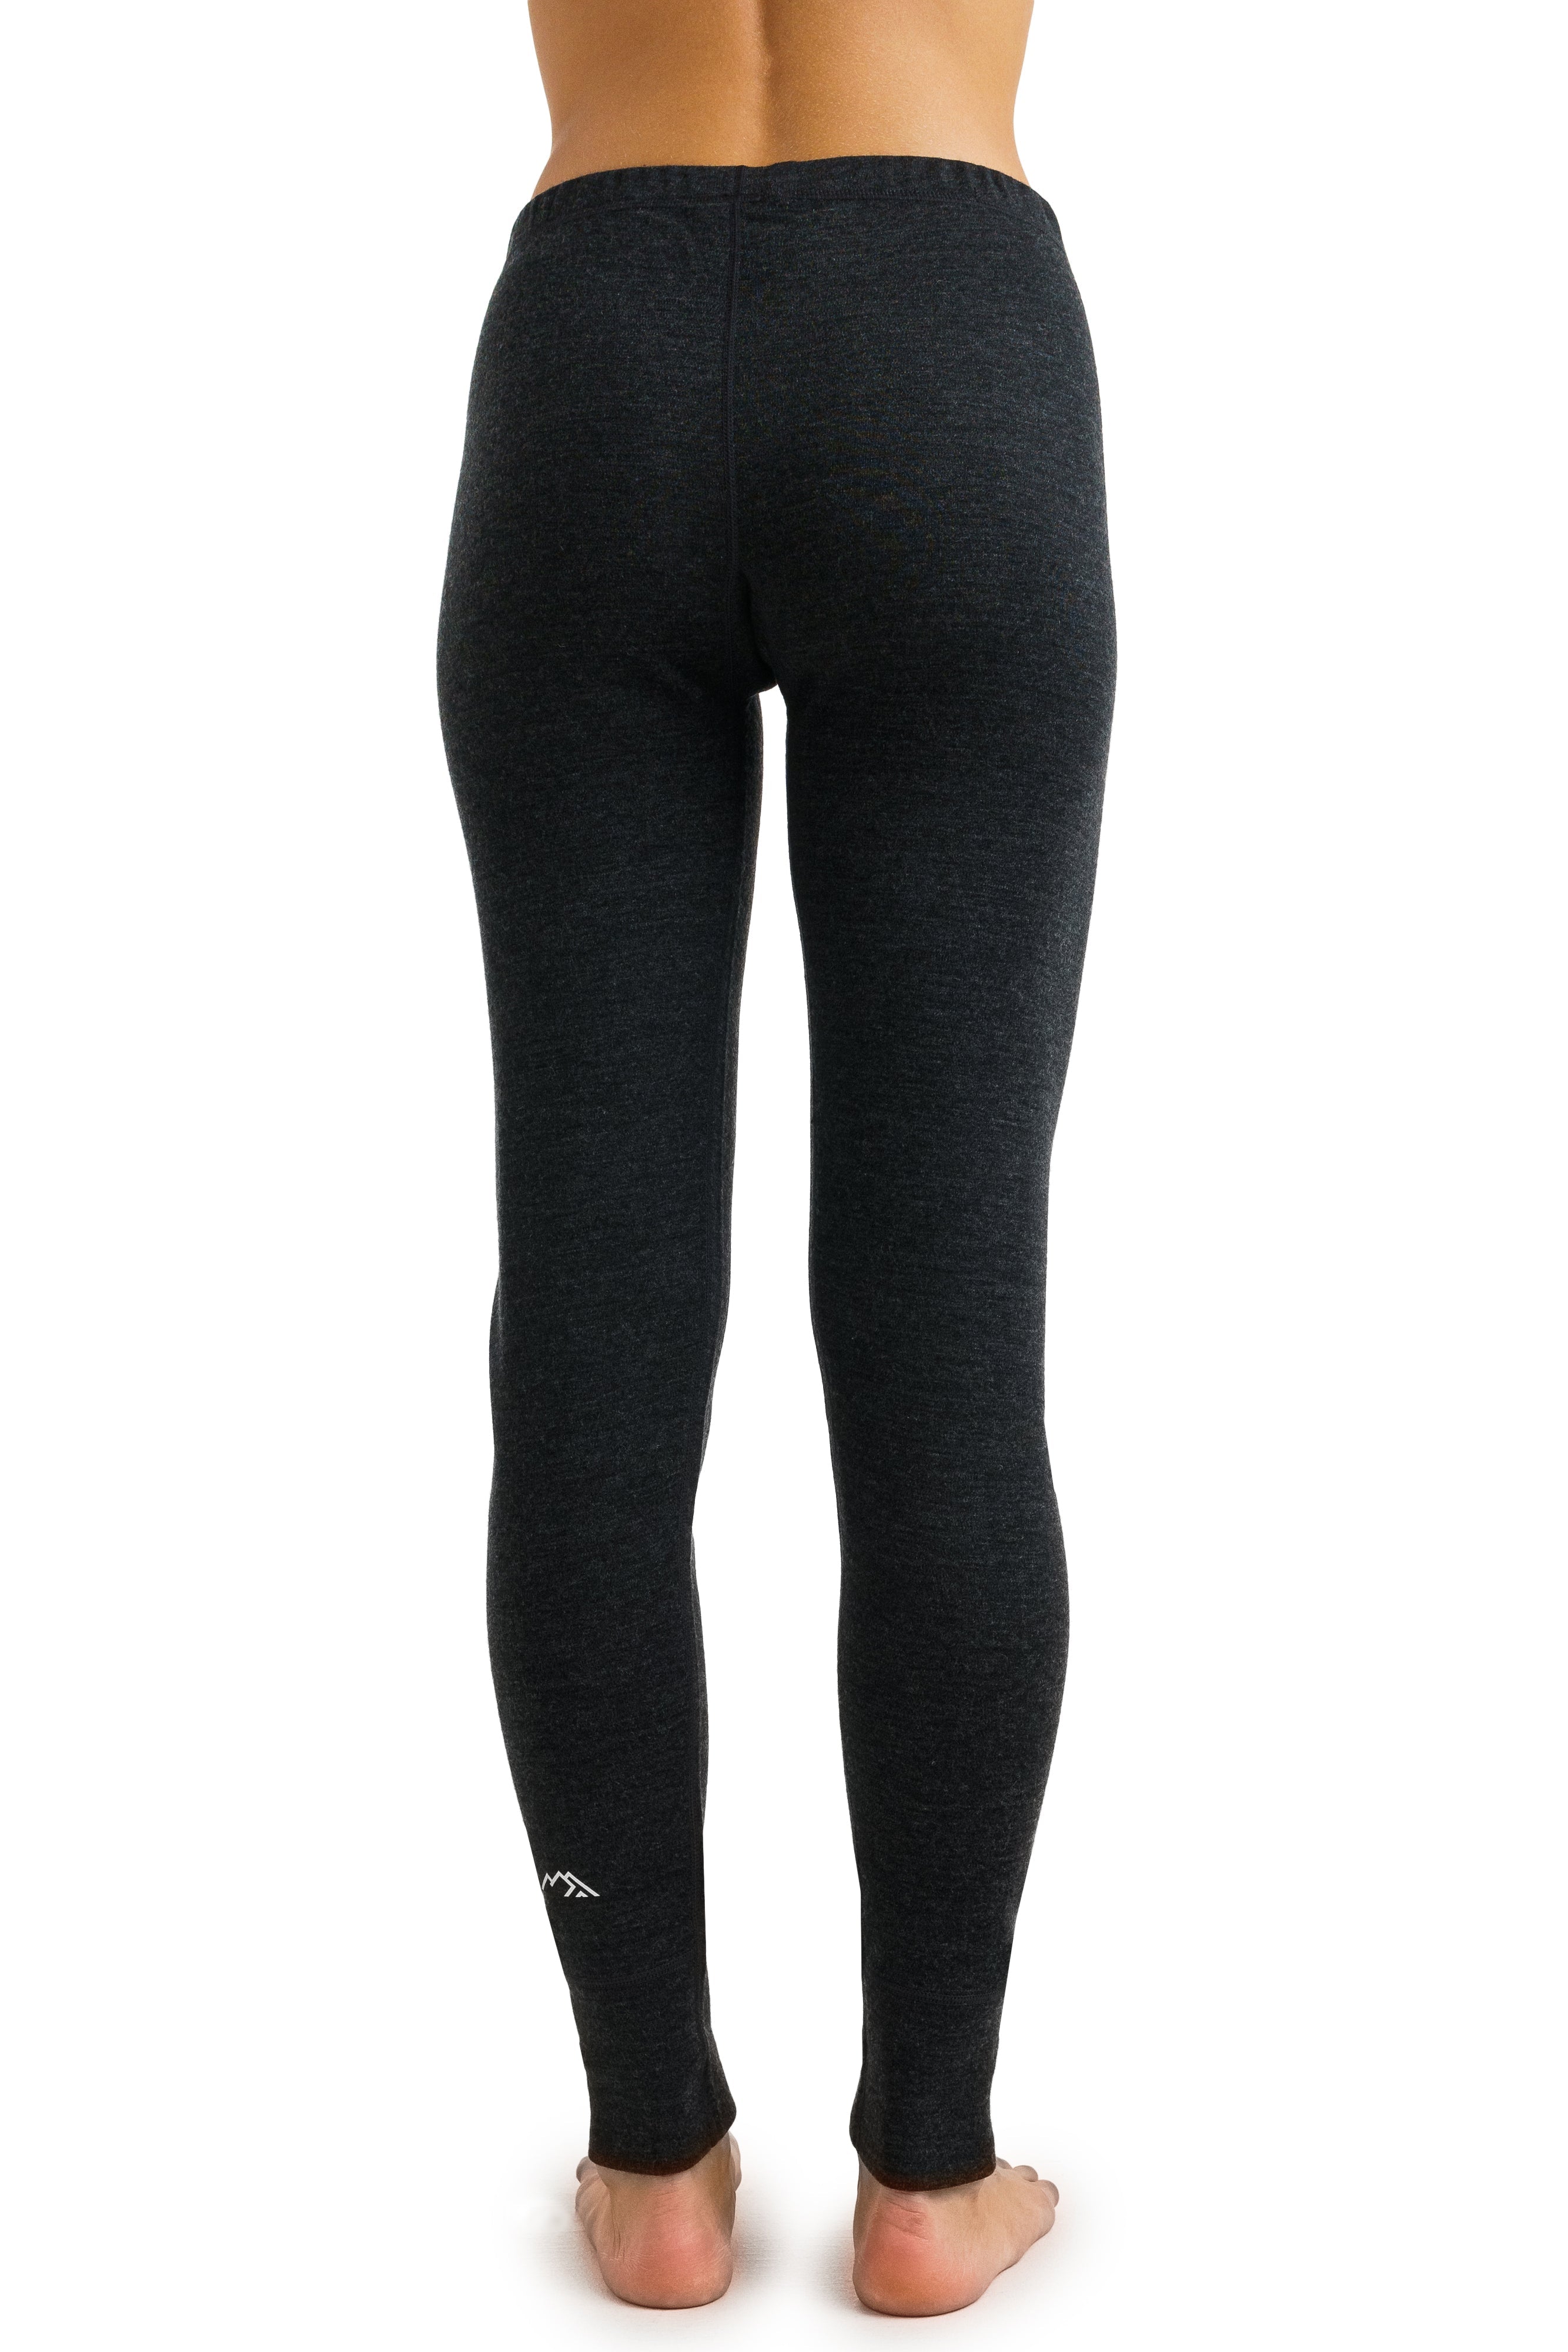 Women's Merino Wool Pants - Base Layer Charcoal Grey, Bottom, Underwear, Thermal  Leggings, Midweight